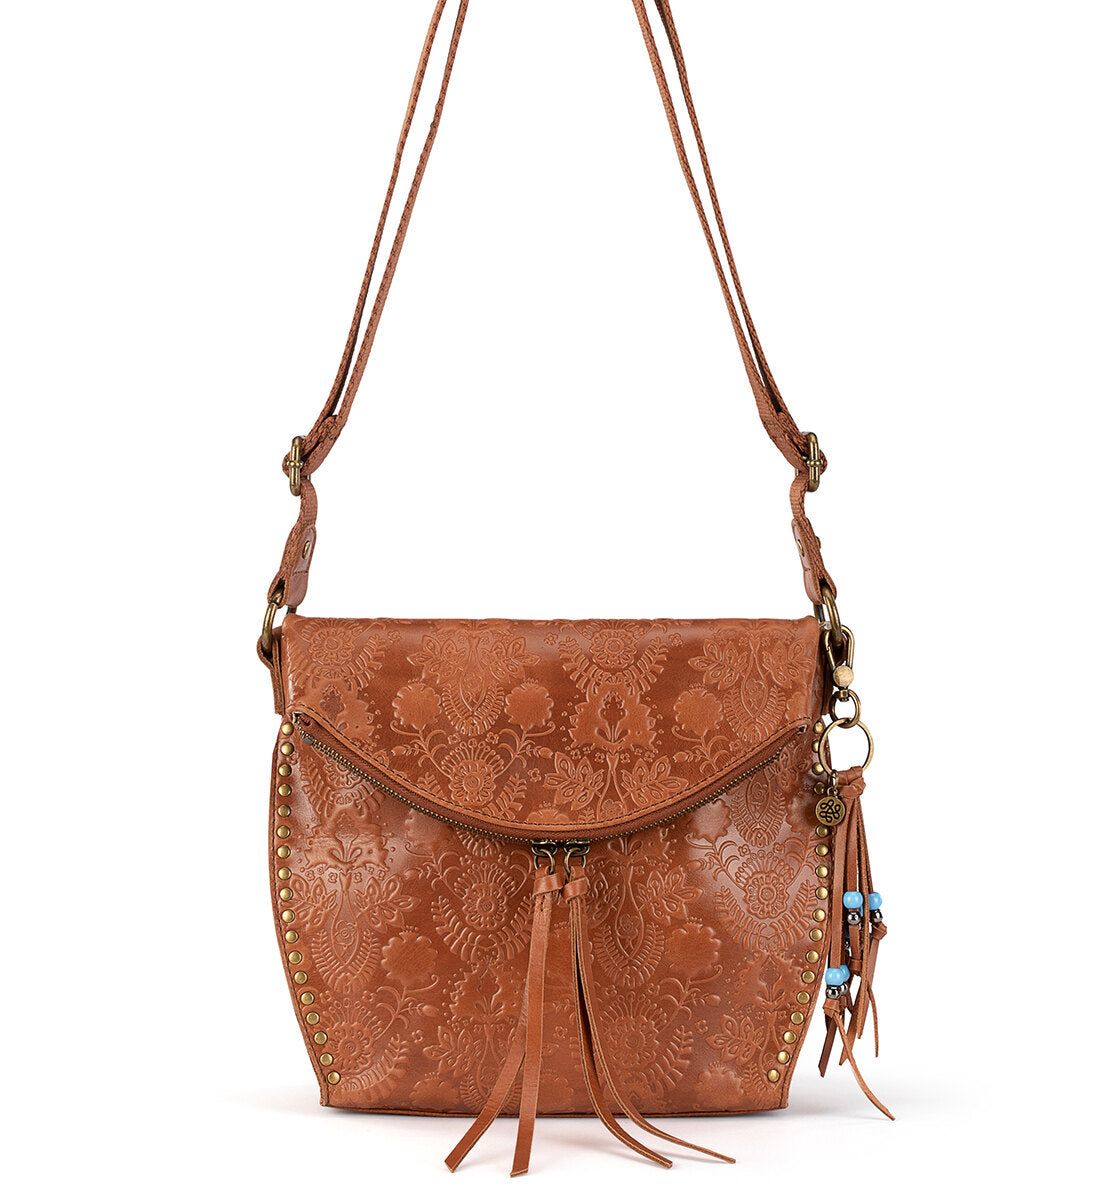 Opinions on The Sak? : r/handbags